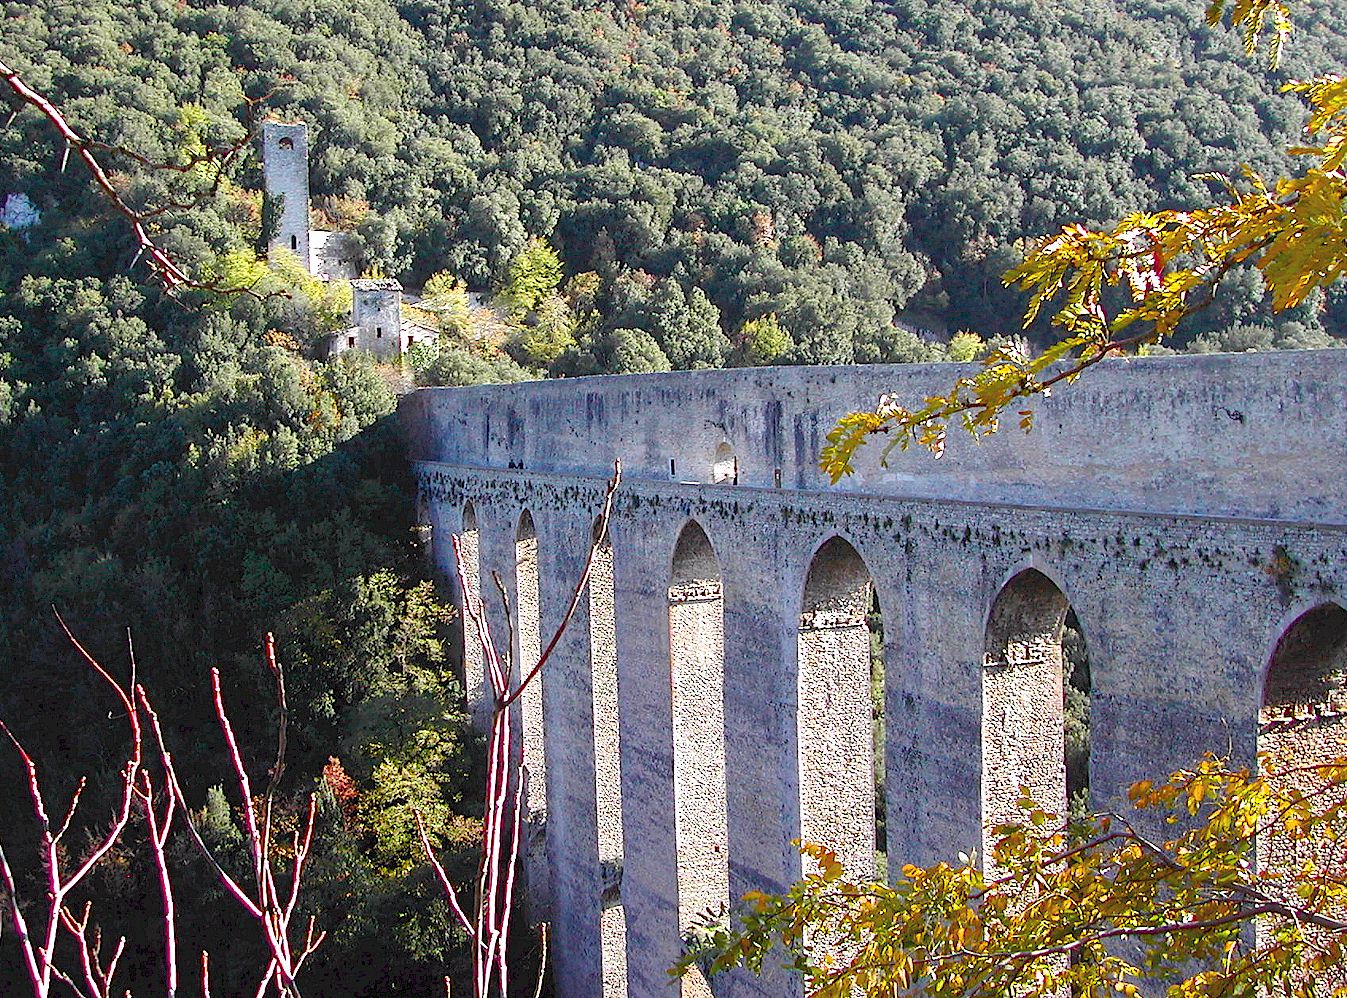 Ponte delle Torri at Spoleto